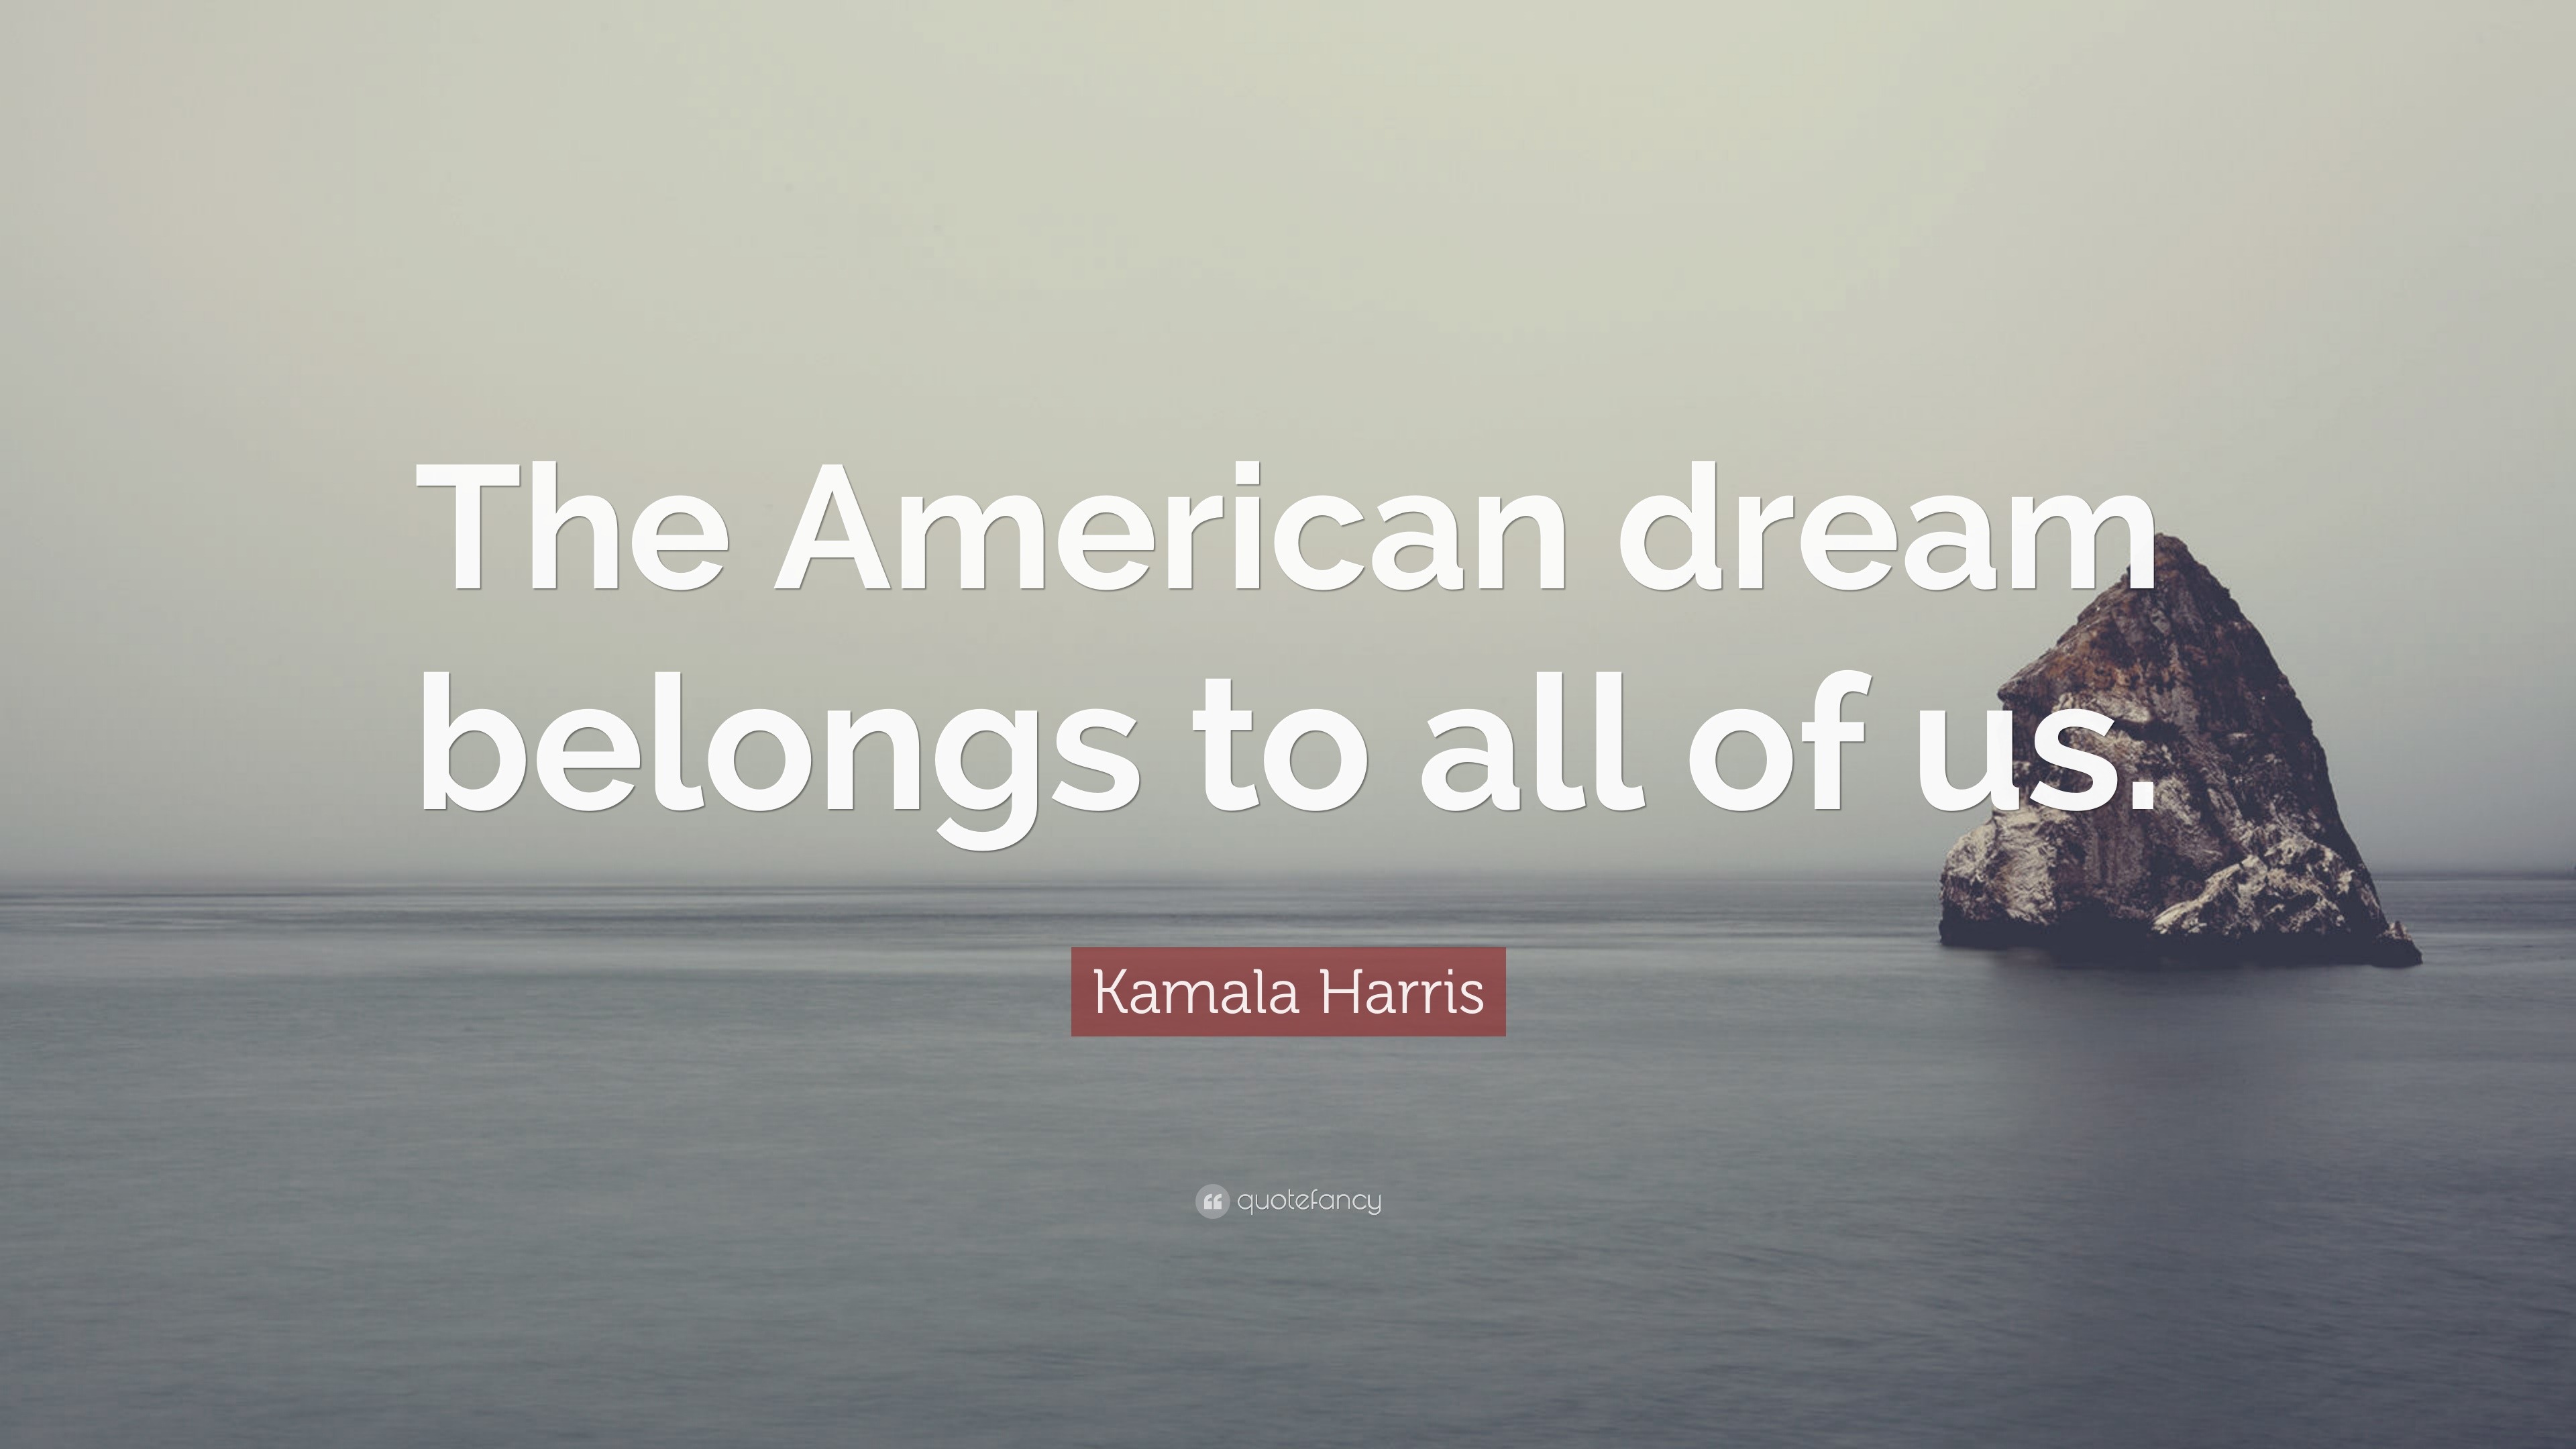 Kamala Harris Quote: “The American dream belongs to all of us.”